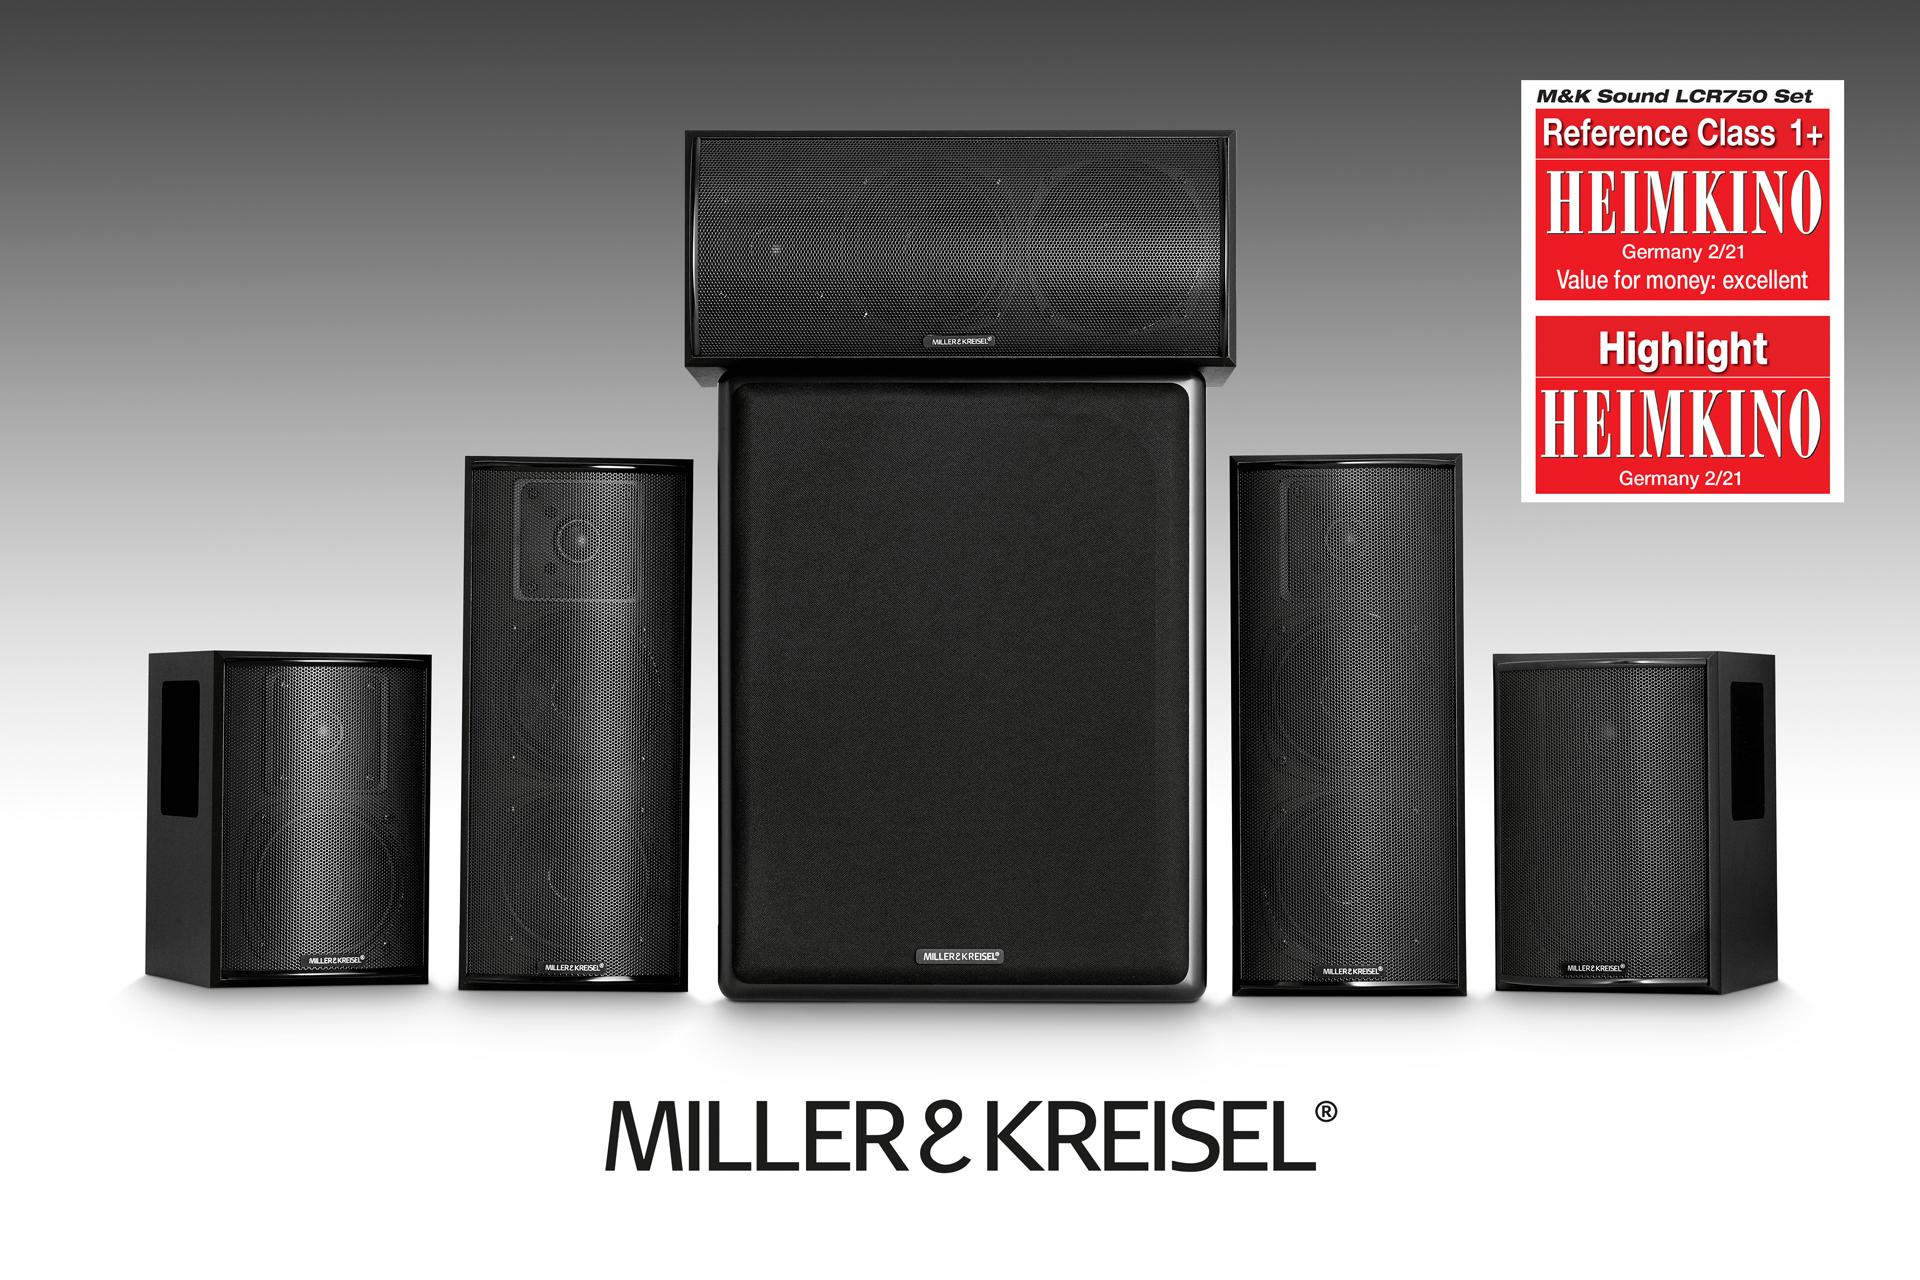 Miller & Kreisel 750 Series 5.1 Home Theater System